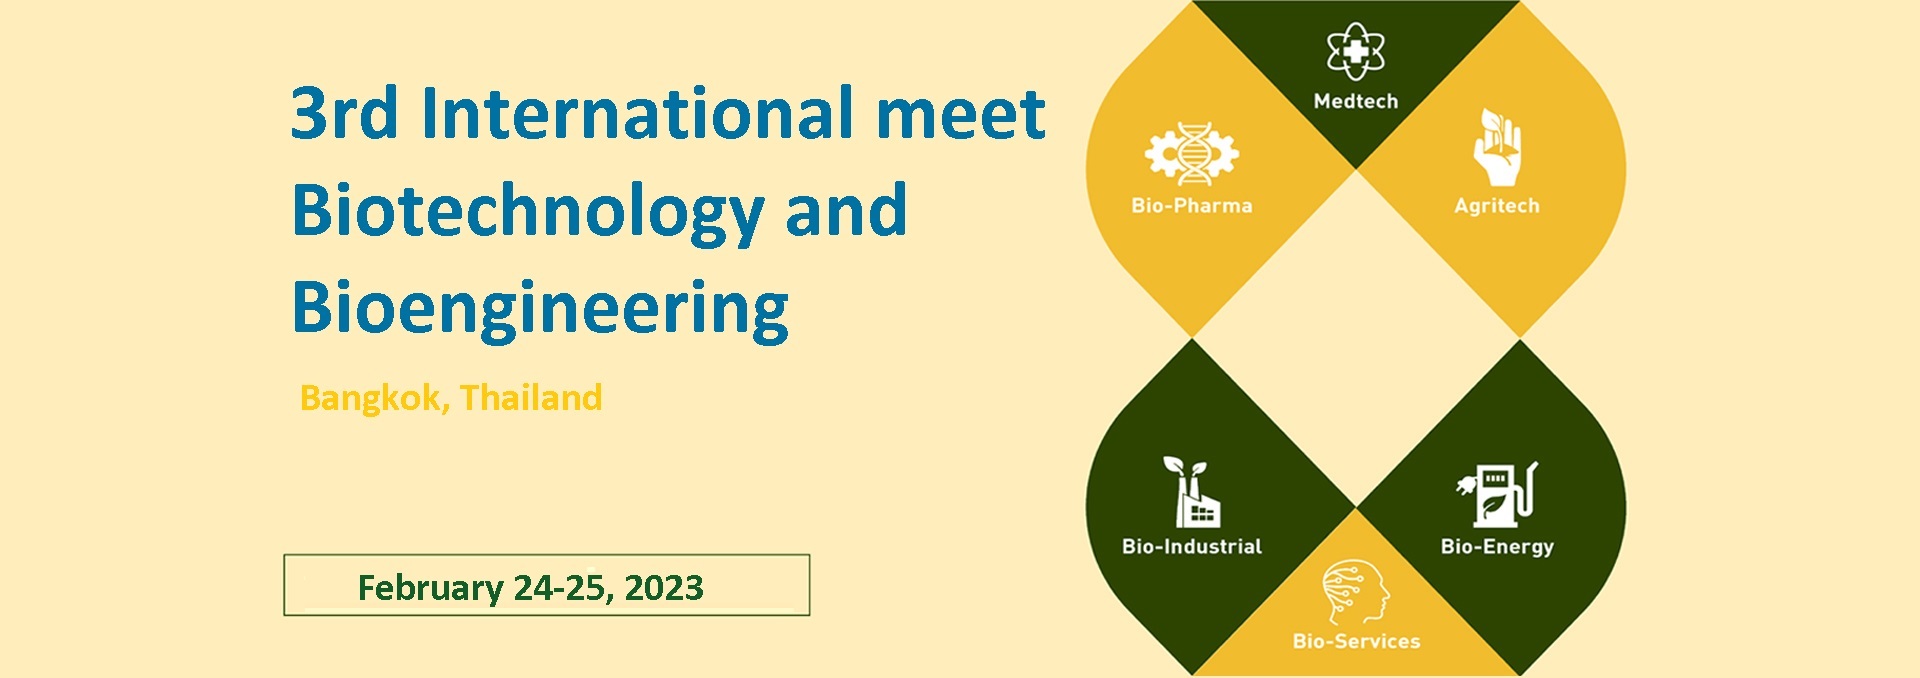 3rd International meet Biotechnology and Bioengineering, Bangkok, Thailand